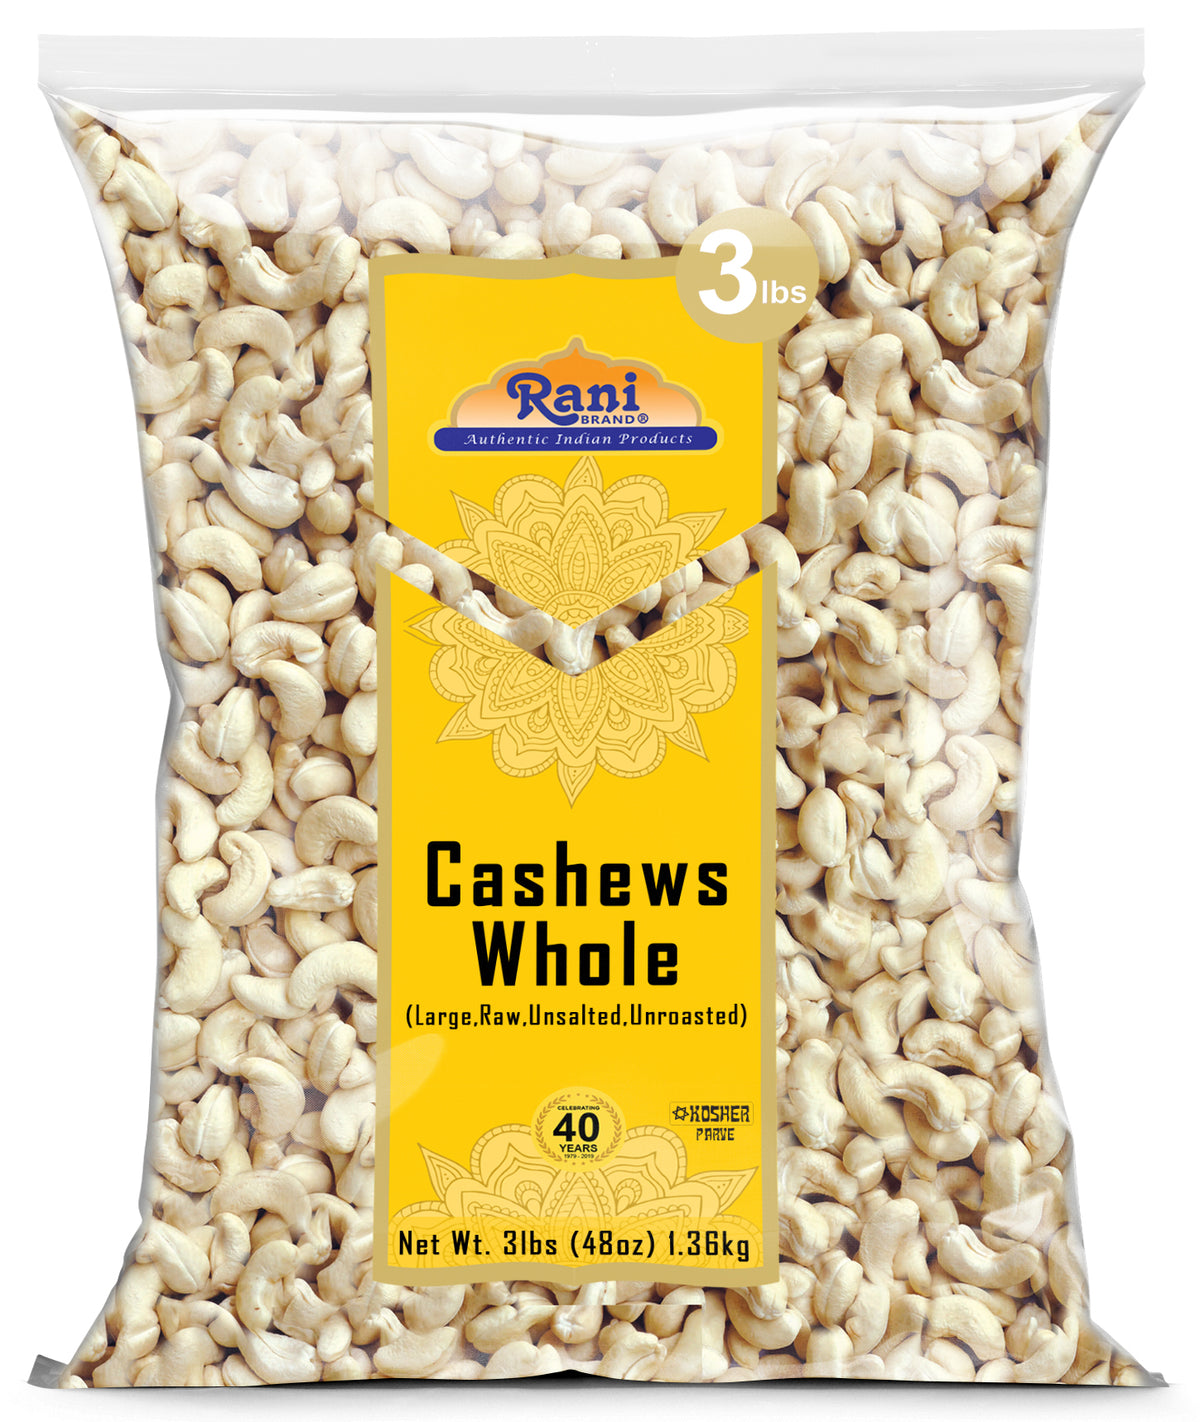 Img 4693  African Cashew Alliance